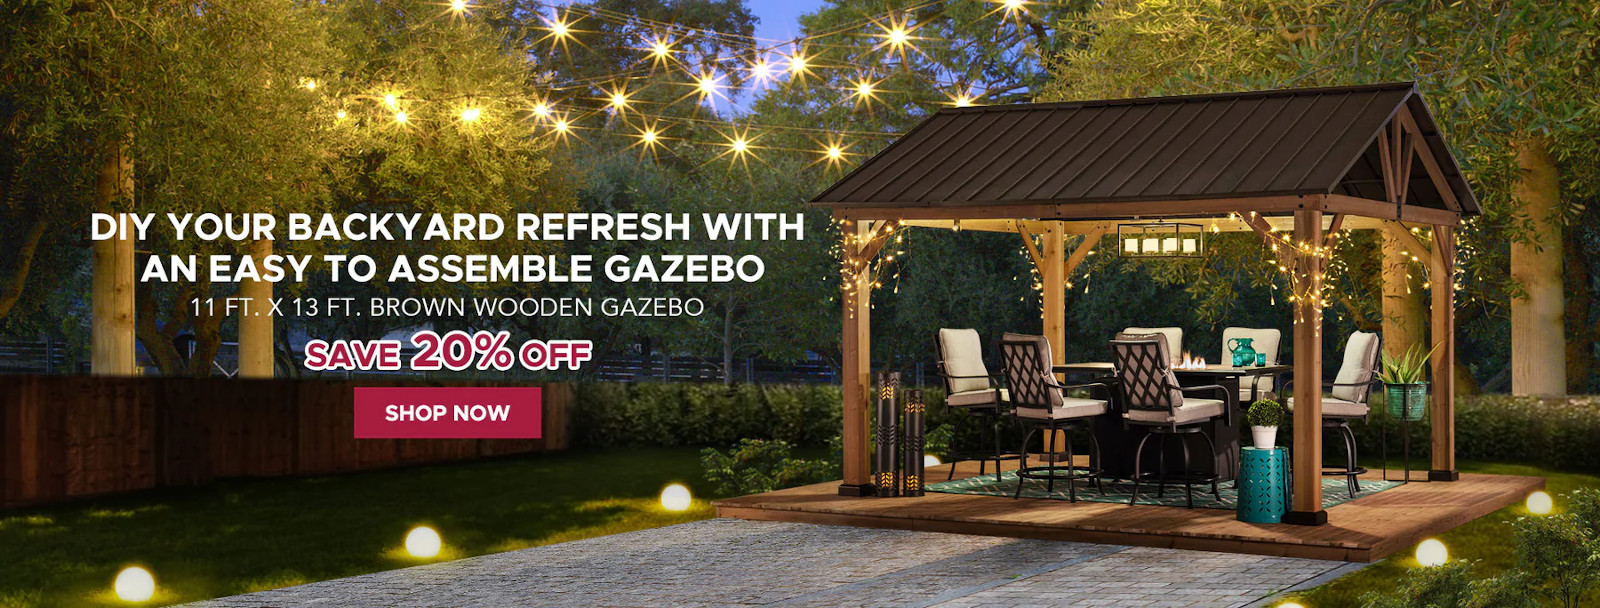 easy assemble gazebo special discount